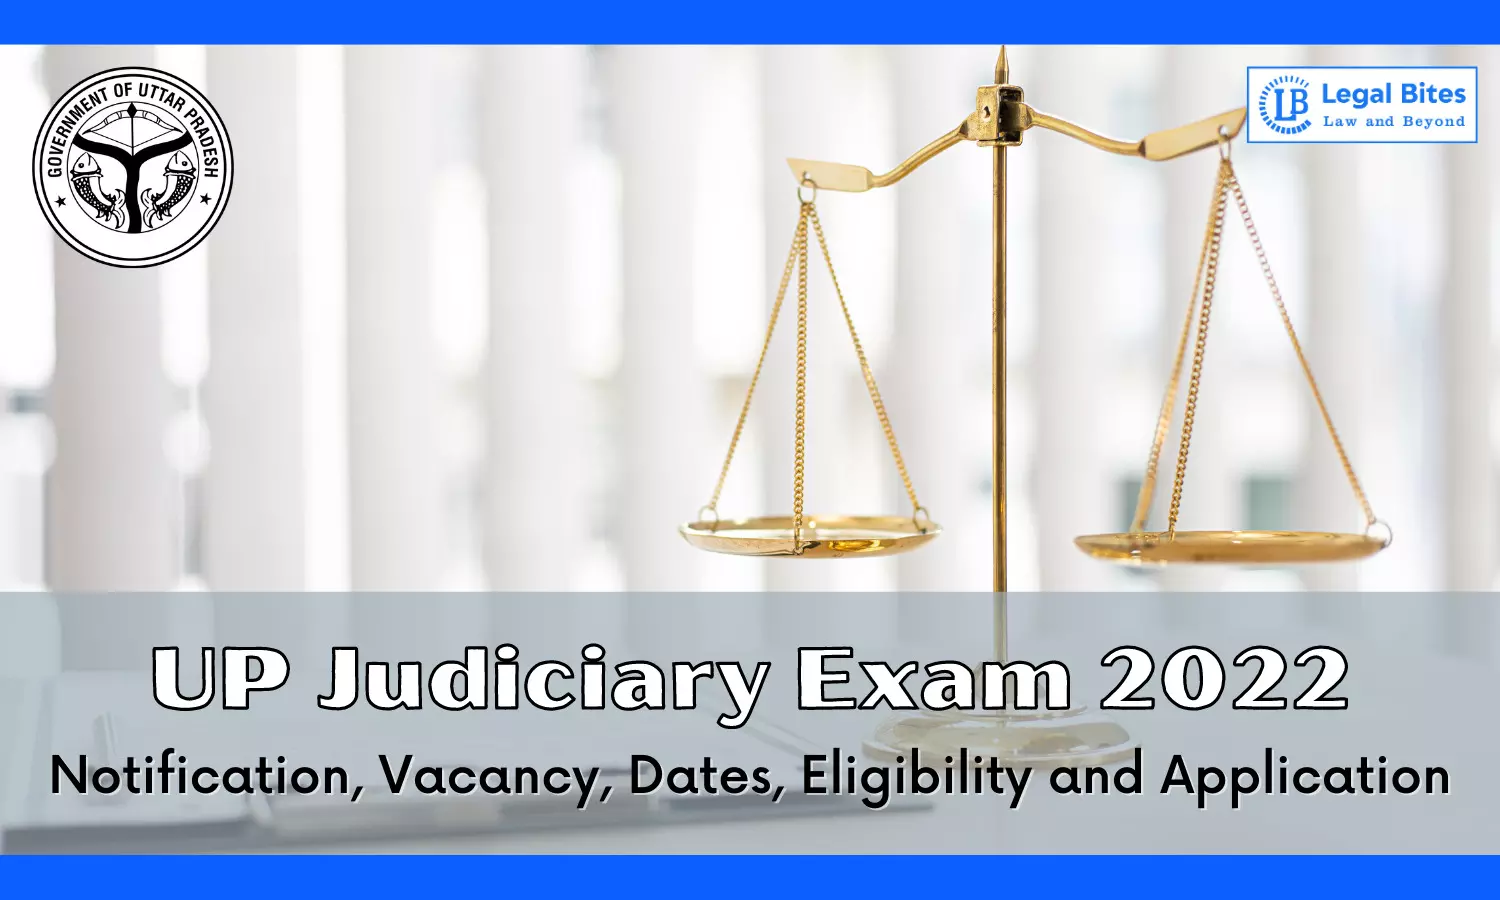 UP Judiciary (UPPSCJ) Exam 2022: Notification, Vacancy, Dates, Eligibility, and Application